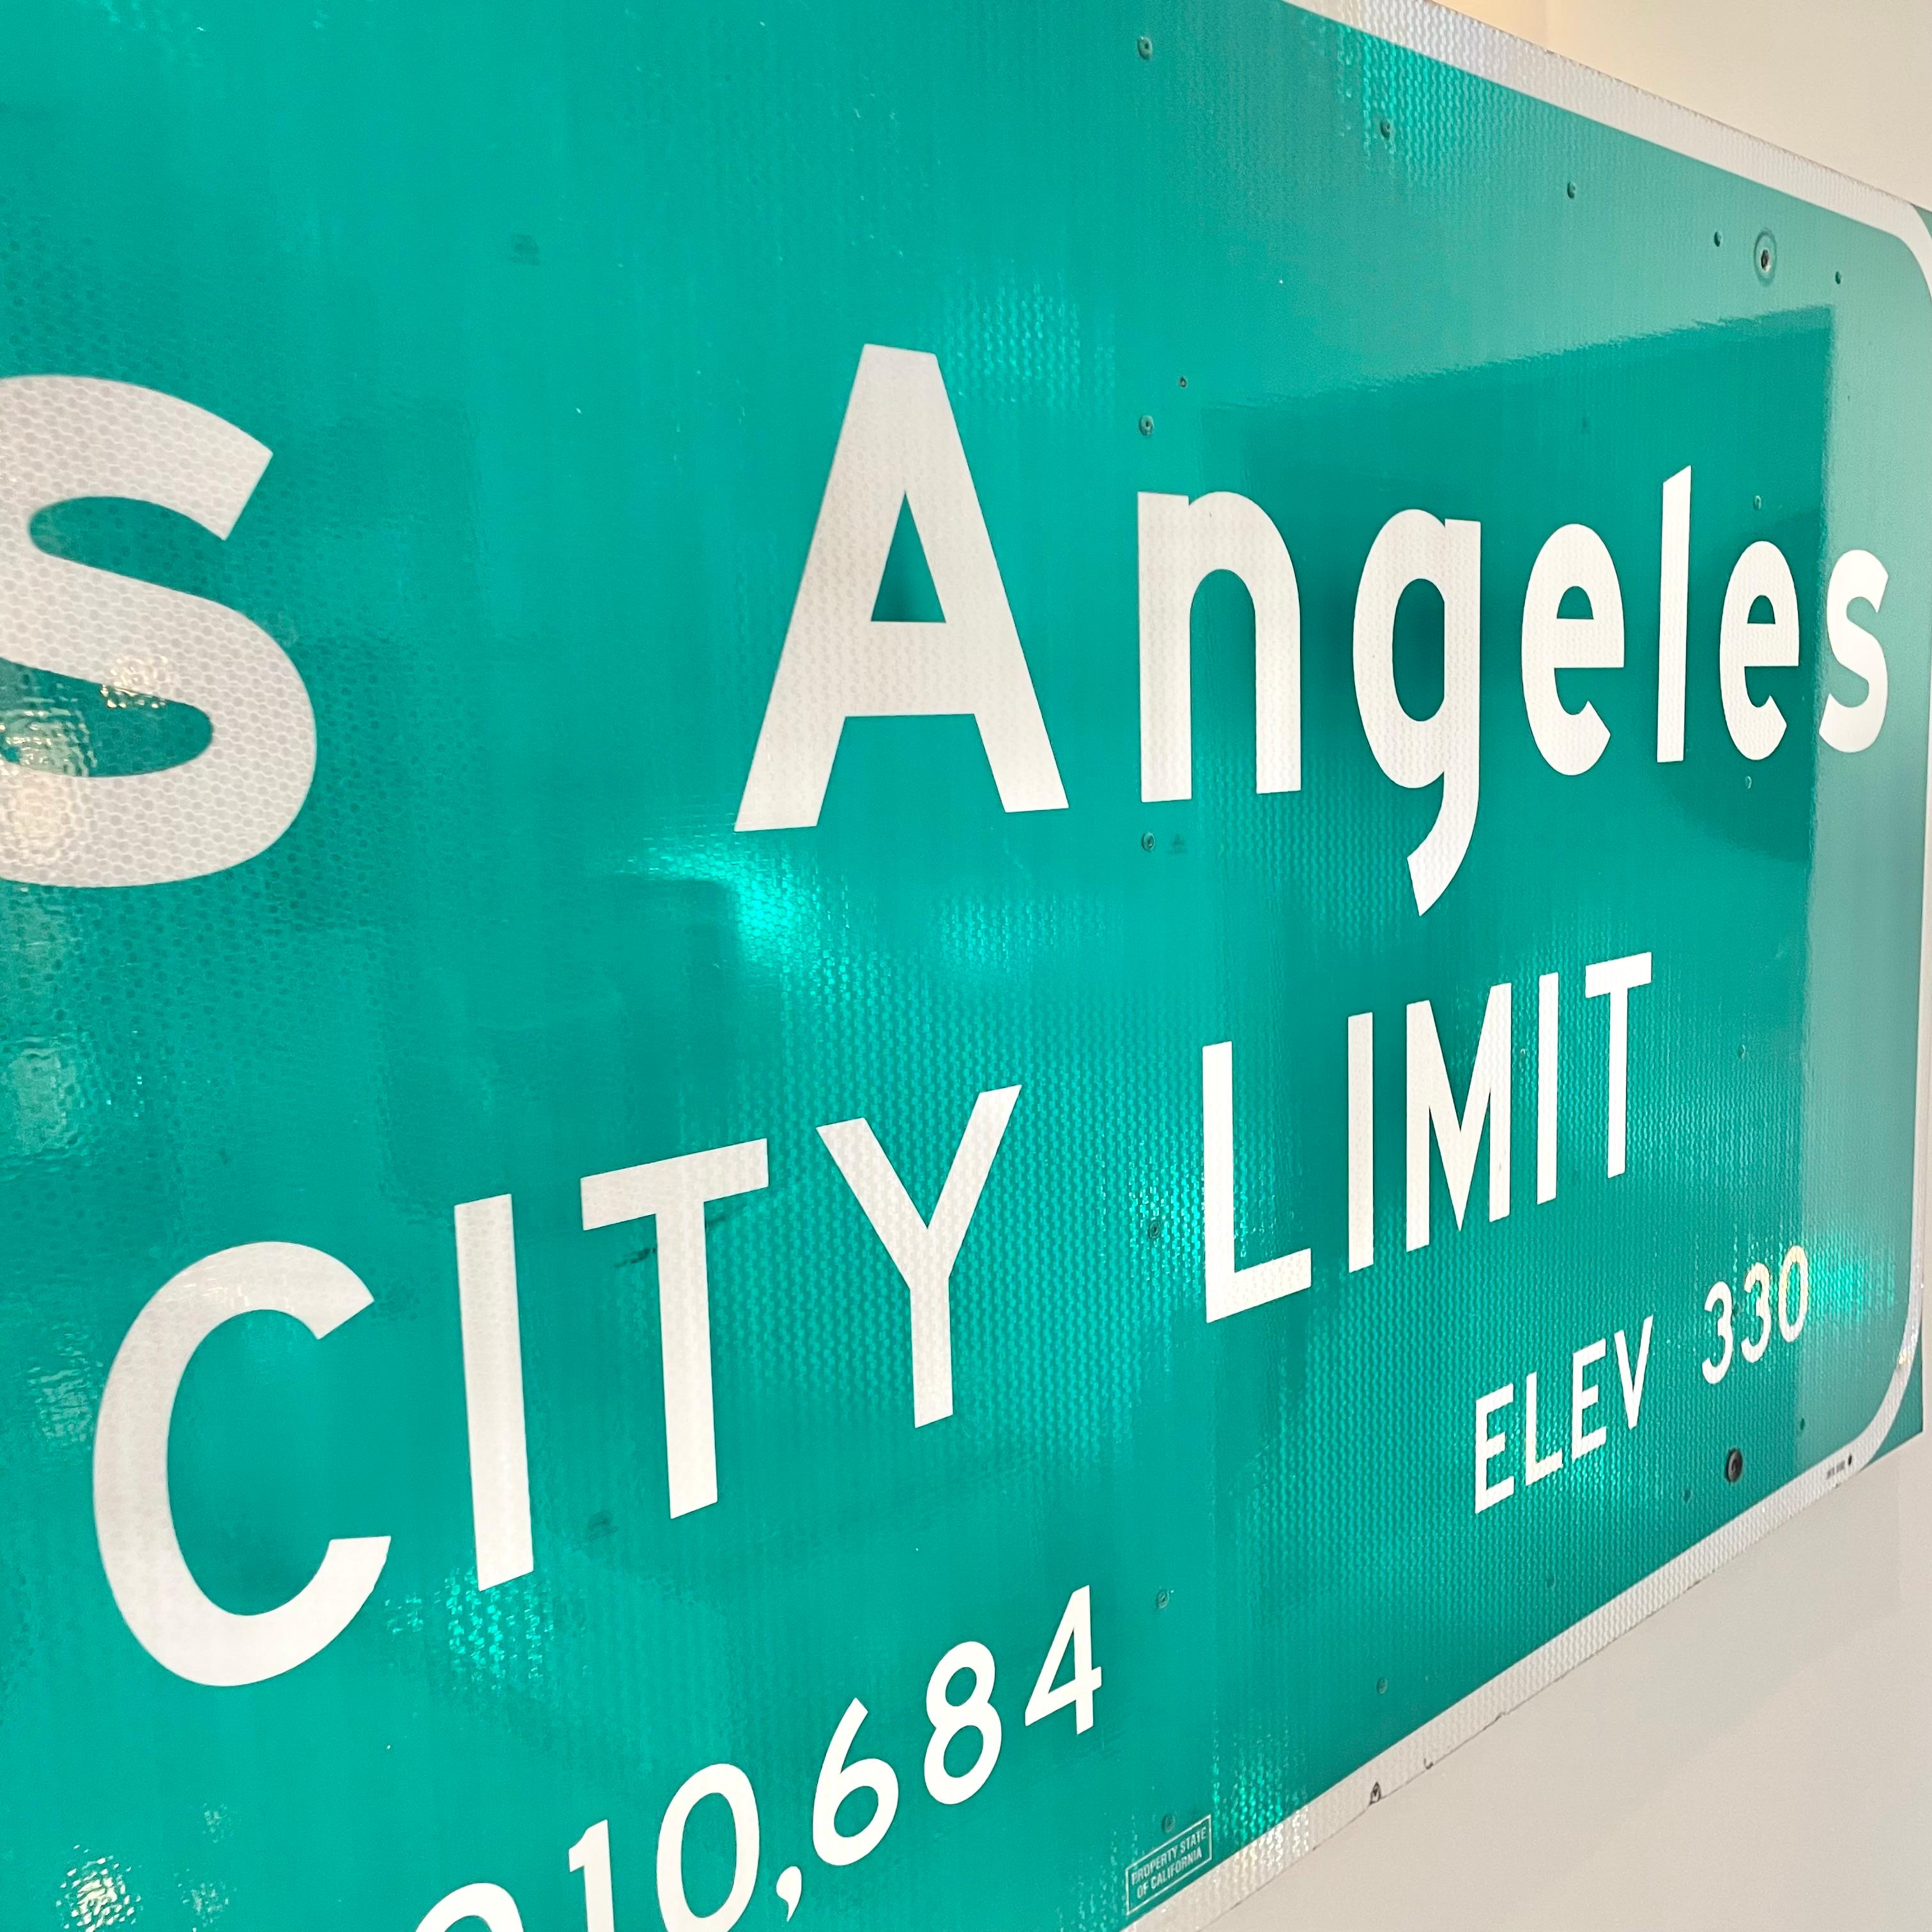 Los Angeles City Limit Freeway Sign, USA 1